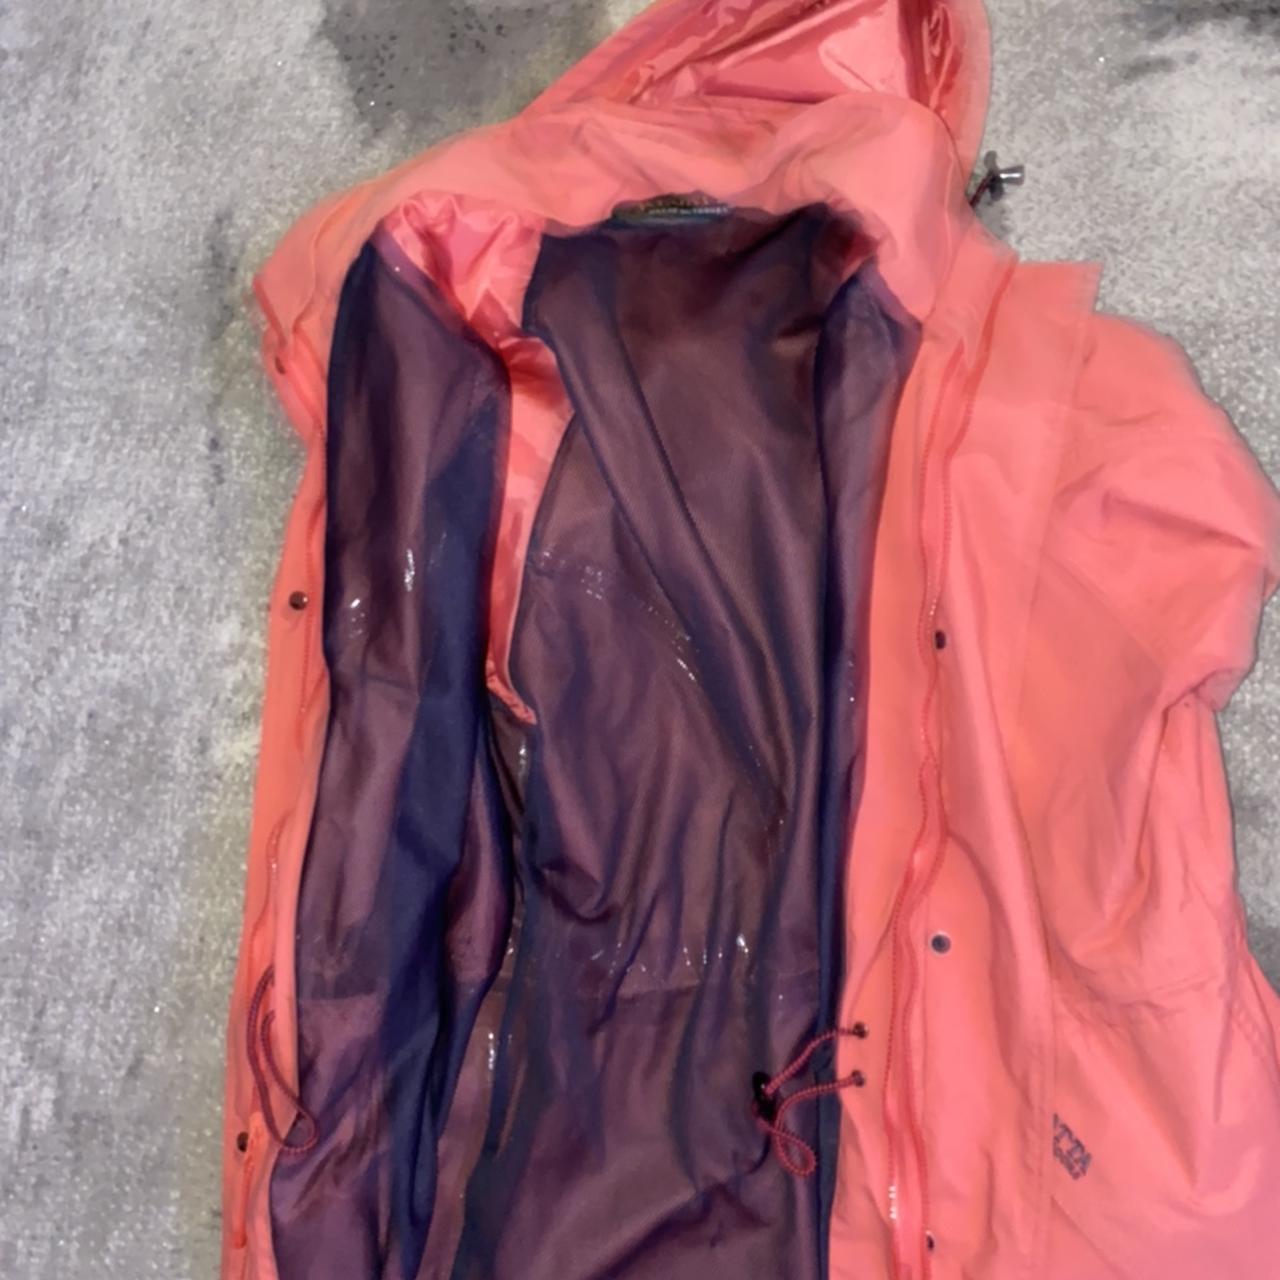 Product Image 3 - Peach-Salmon Regatta Jacket.
Double Zip Up